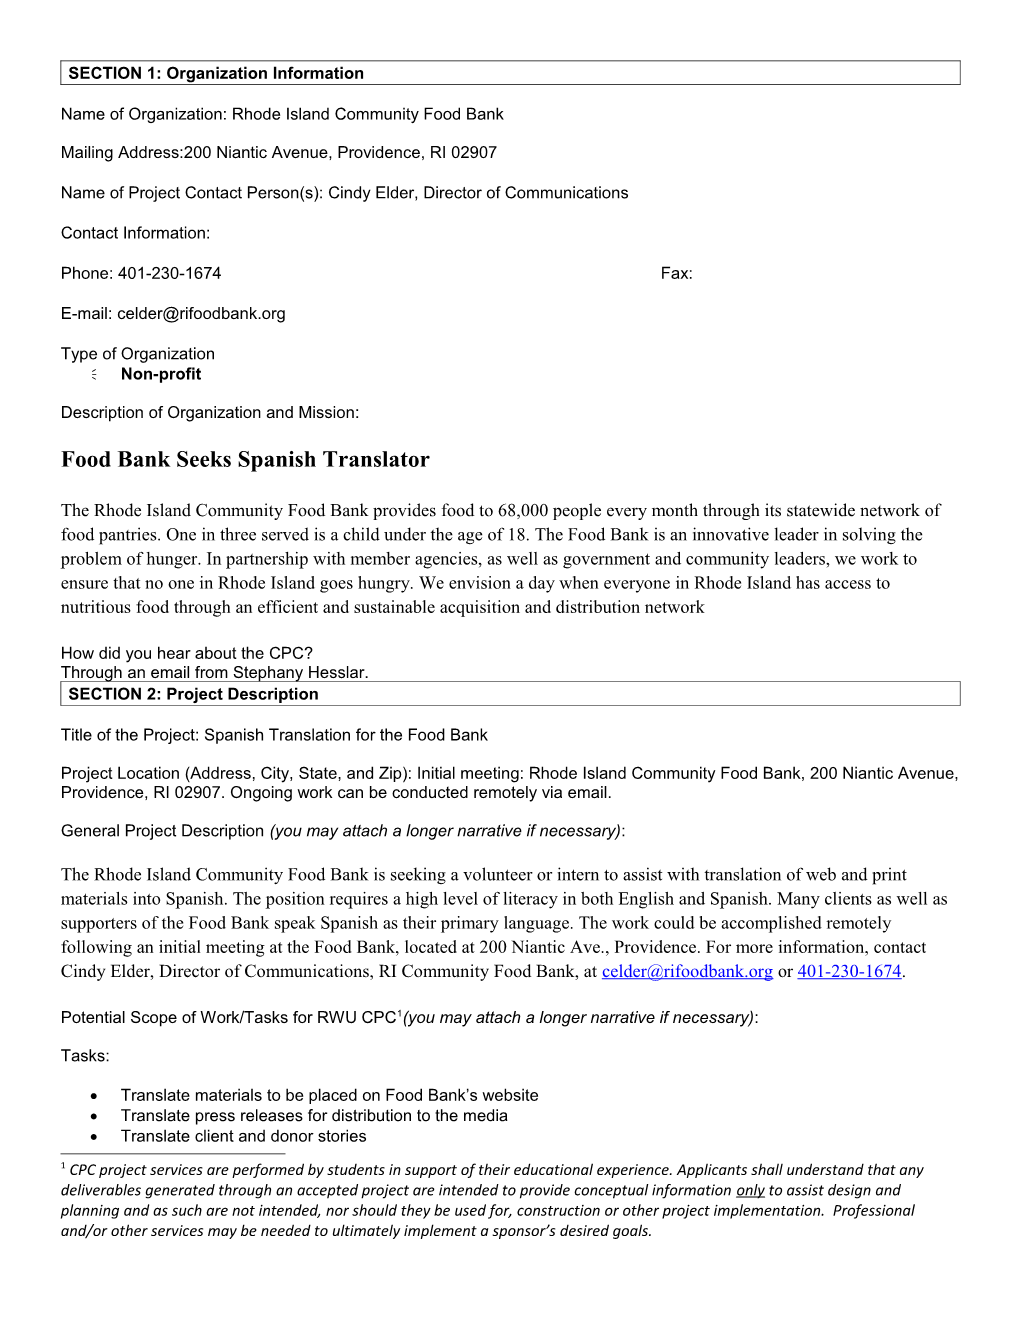 Name of Organization: Rhode Island Community Food Bank